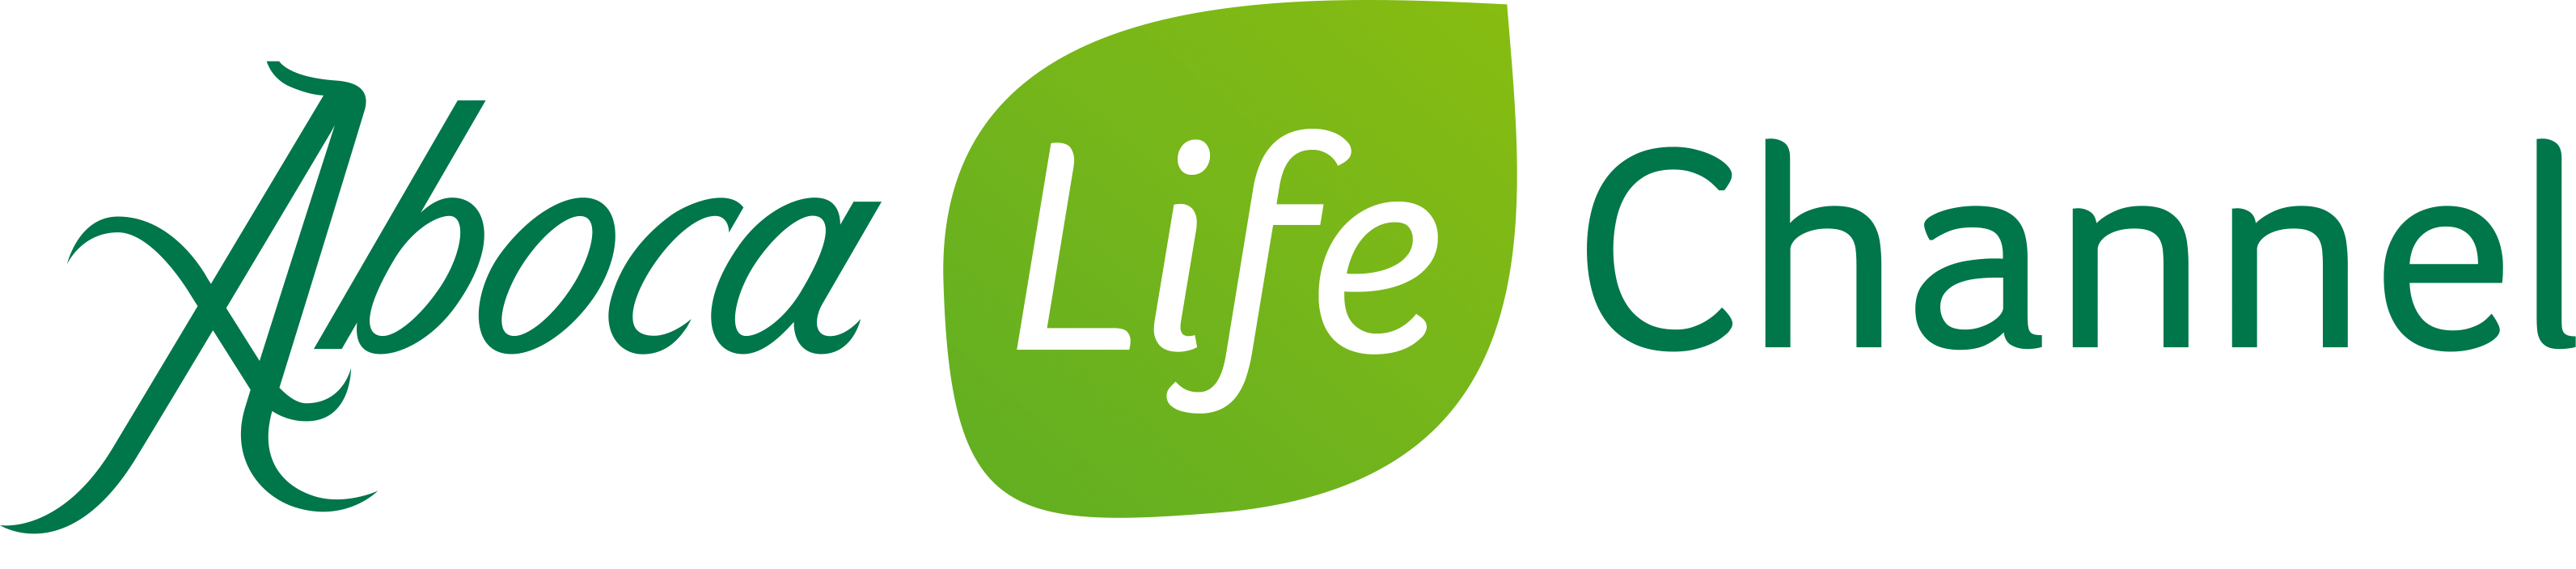 Aboca-LIFE-Channel-logo.png